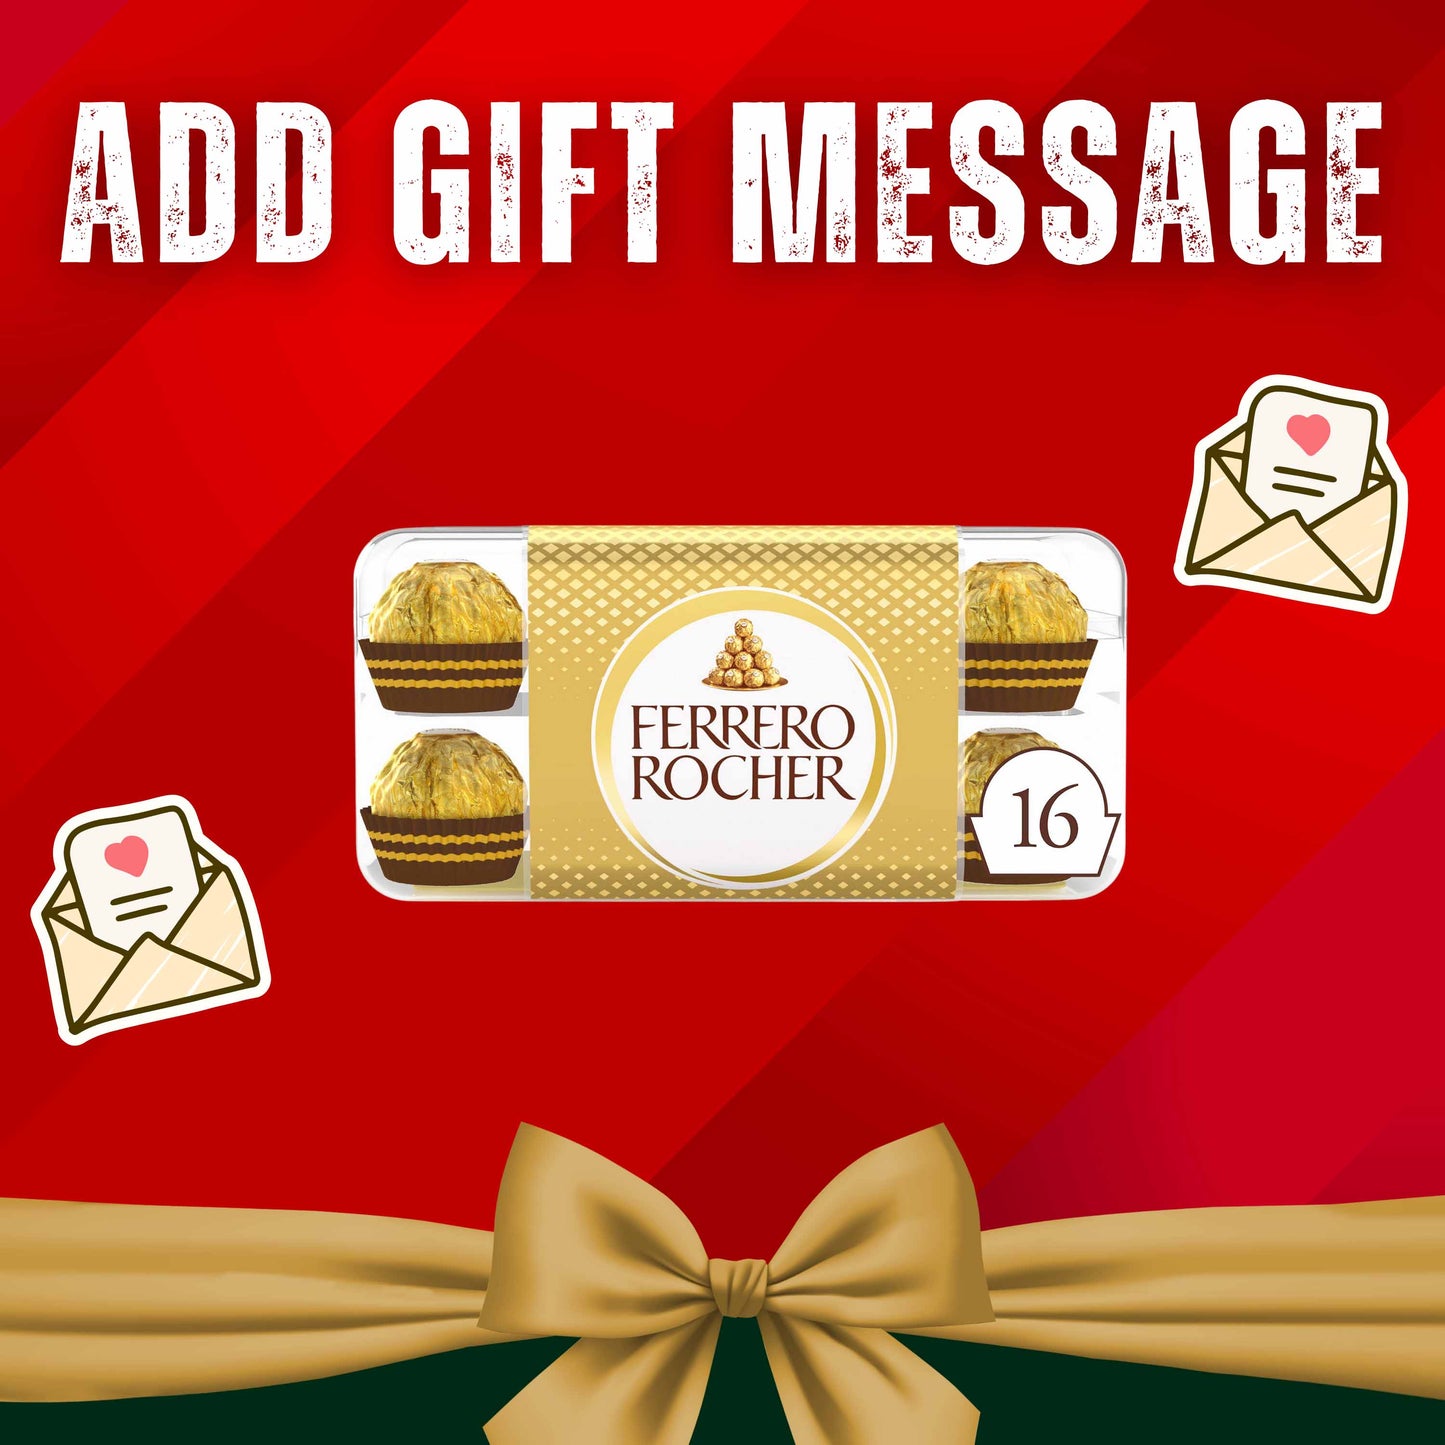 Ferrero Rocher Chocolate Pralines Gift Box 16 Pieces - 200g - Gift Message